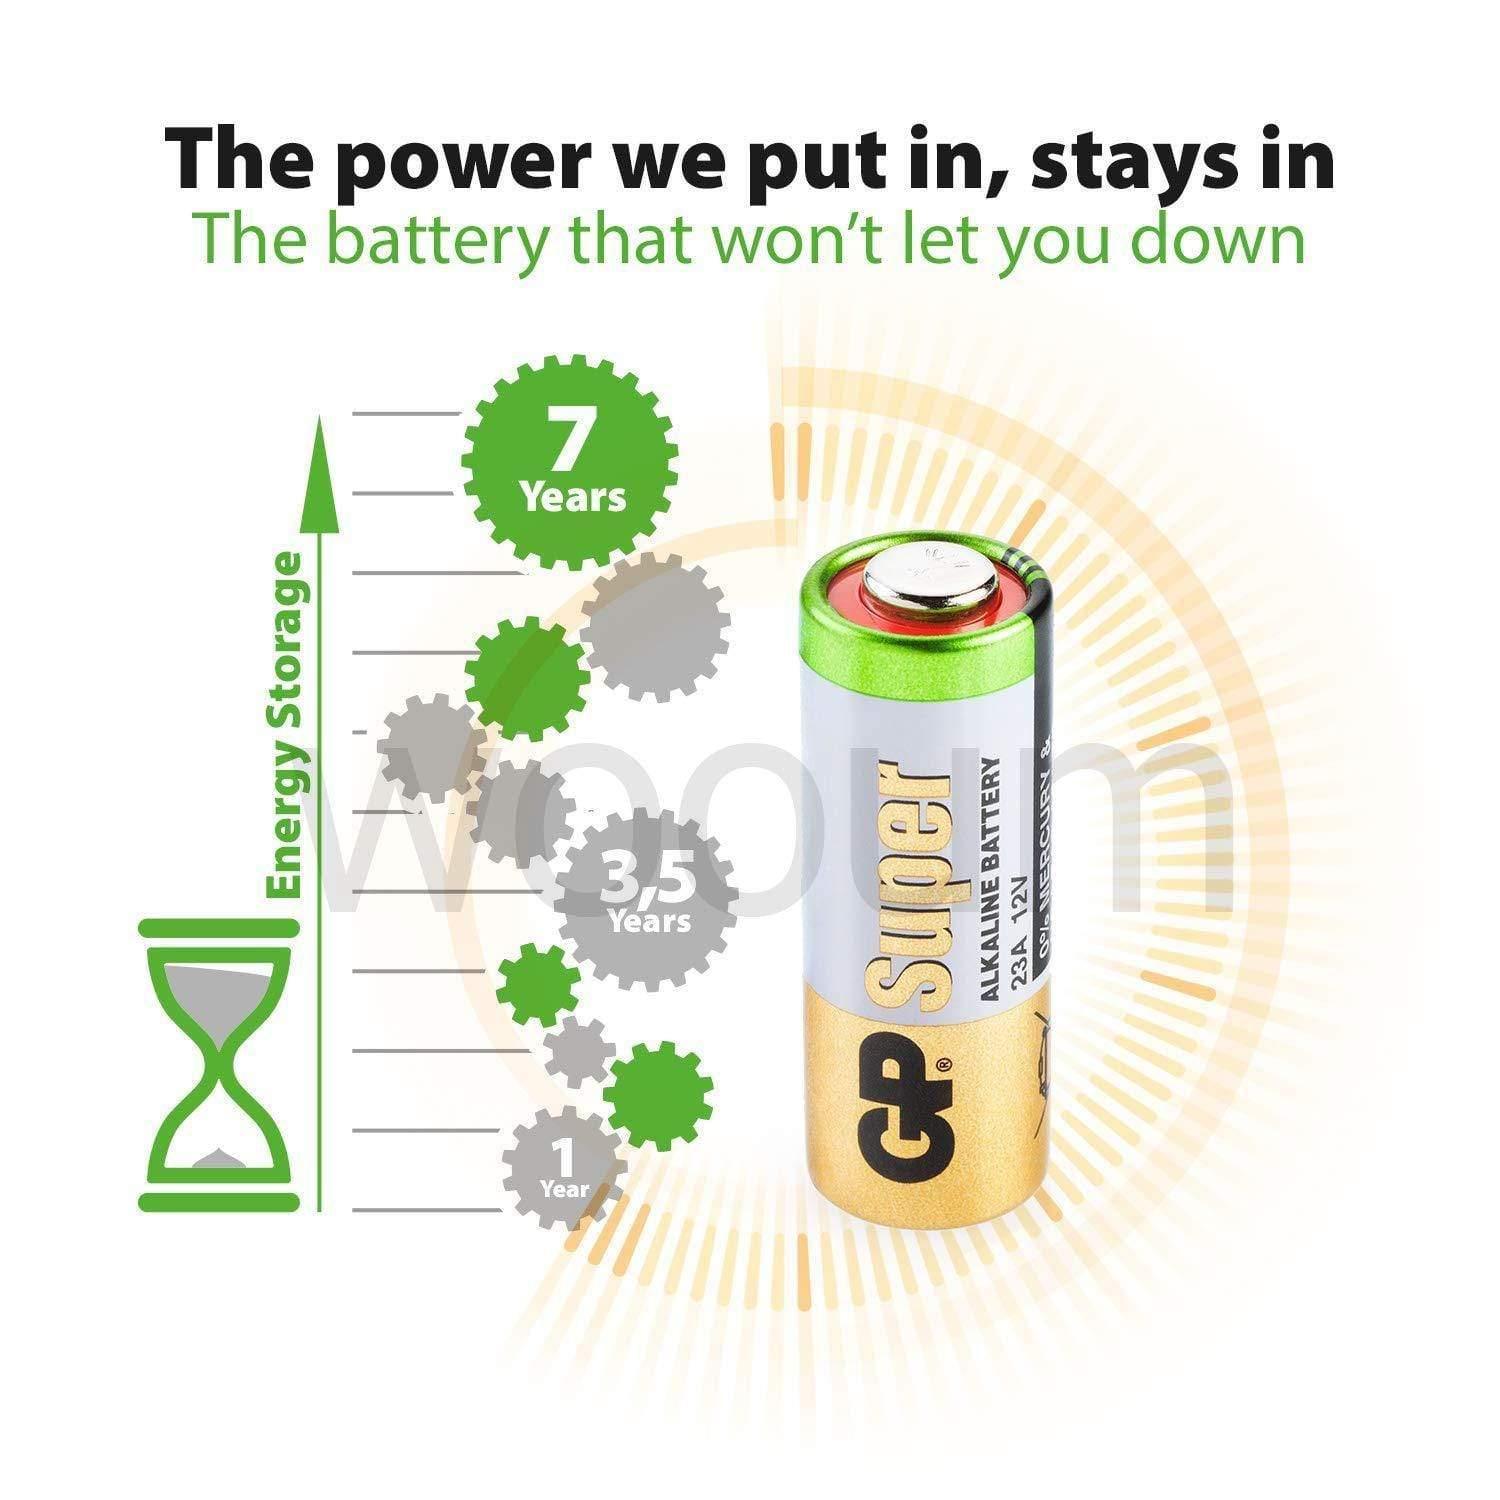 GP high voltage 23A Pack of 12V Alkaline Battery High Voltage Cell Car Remote Battery-General Purpose Batteries-dealsplant